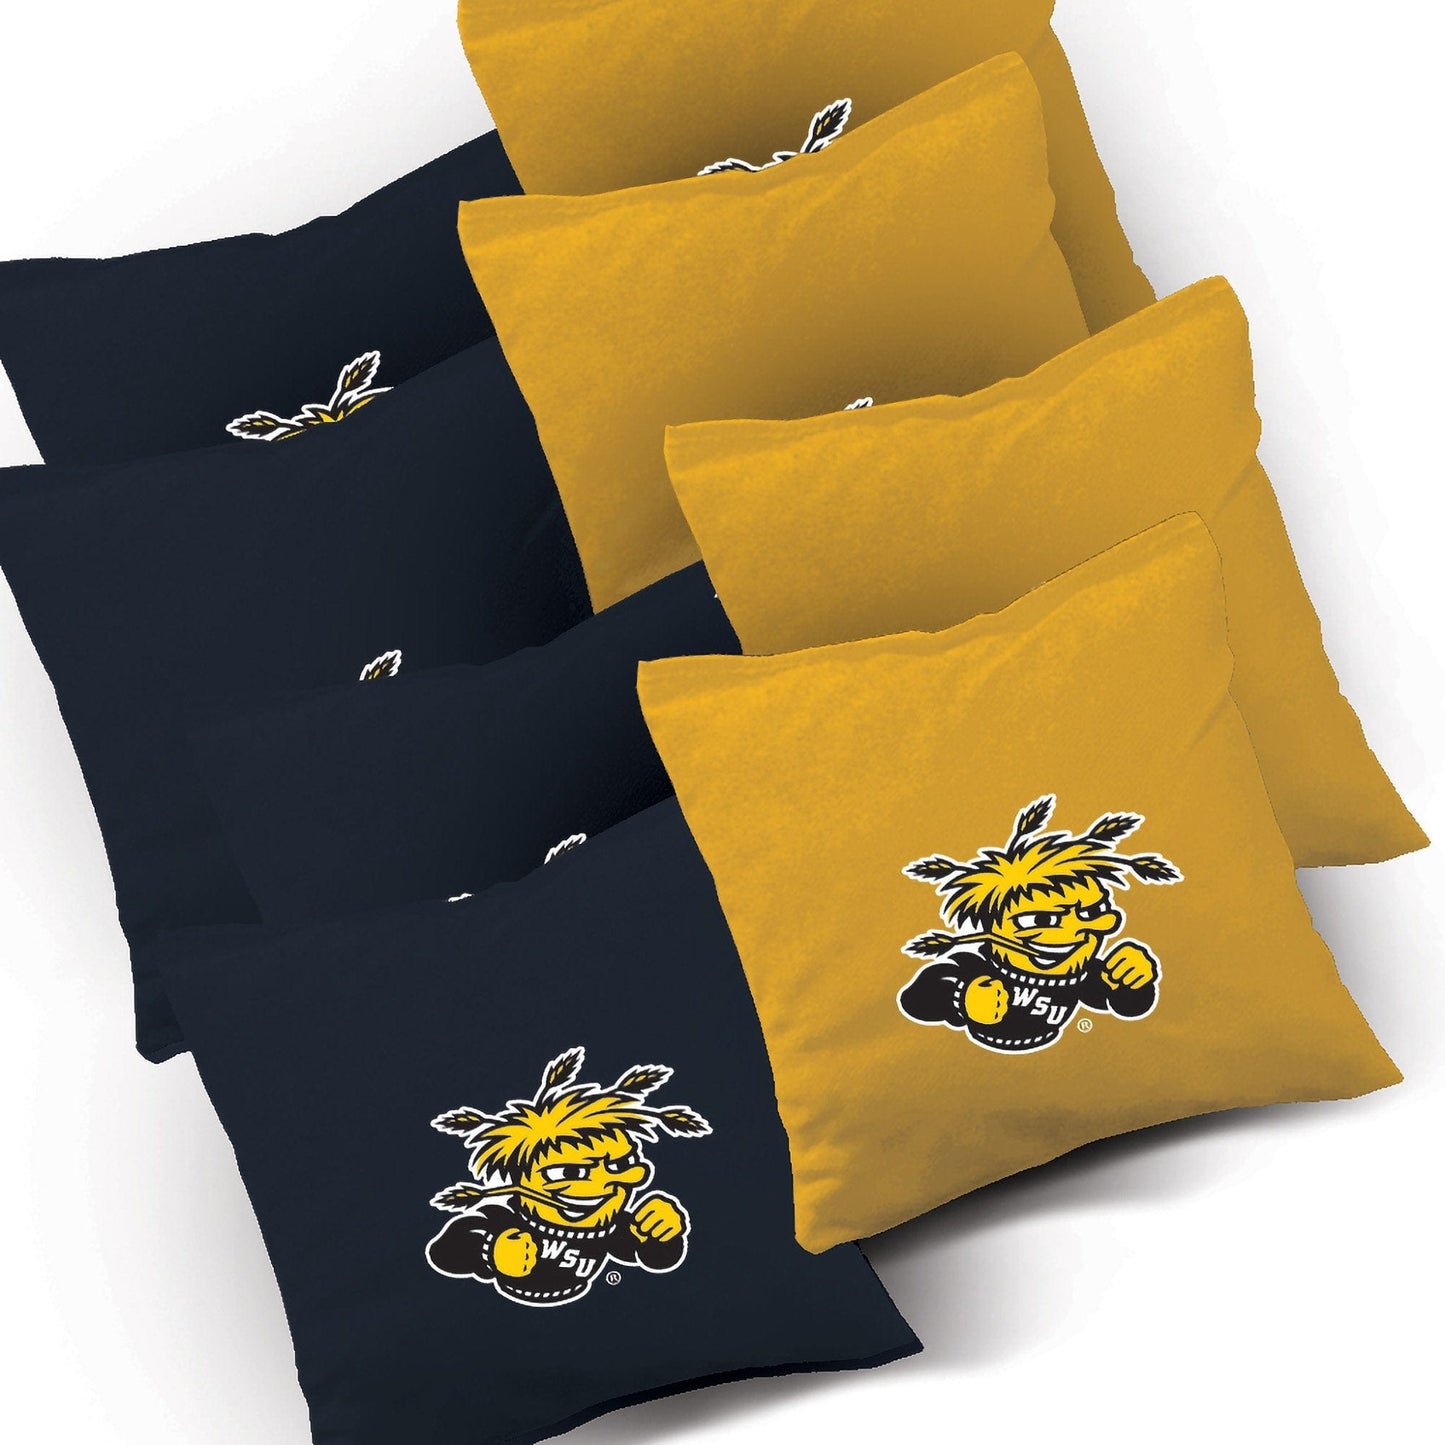 Wichita State Shockers Striped team logo bags